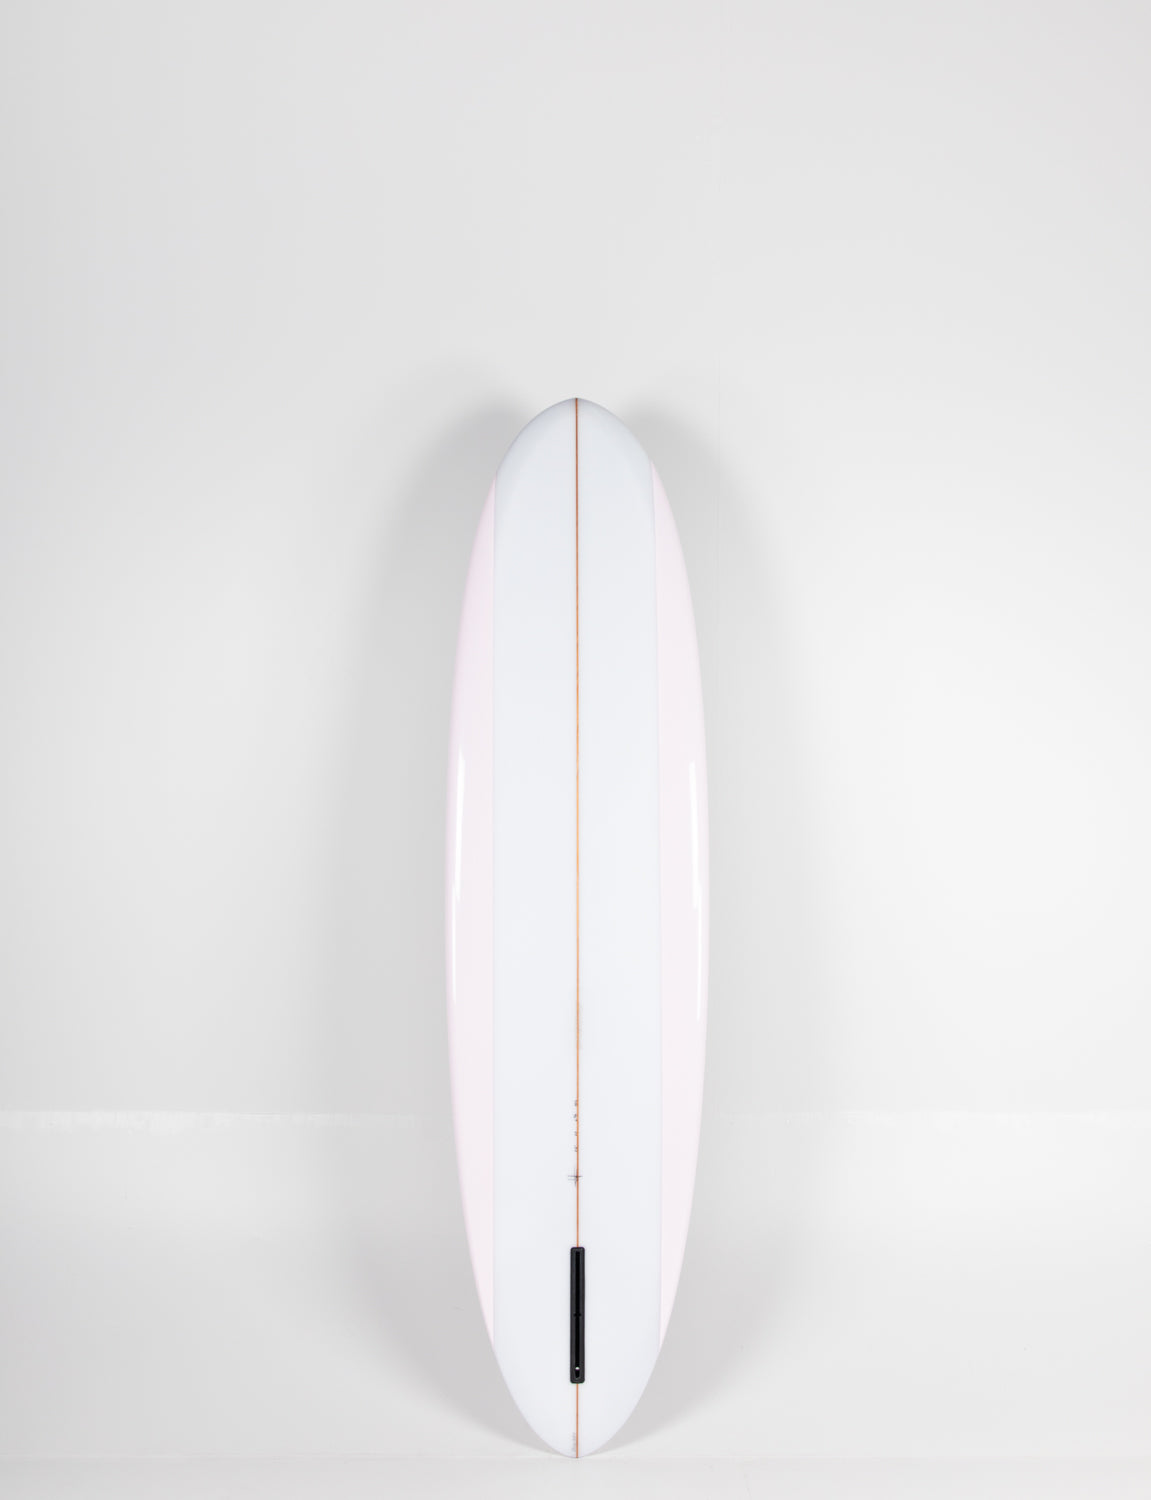 Pukas Surf Shop - Pukas Surfboard - MID LENGTH by Son Of Cobra - 7’2” x 21 x 2 3/4 - 47L - PL00349